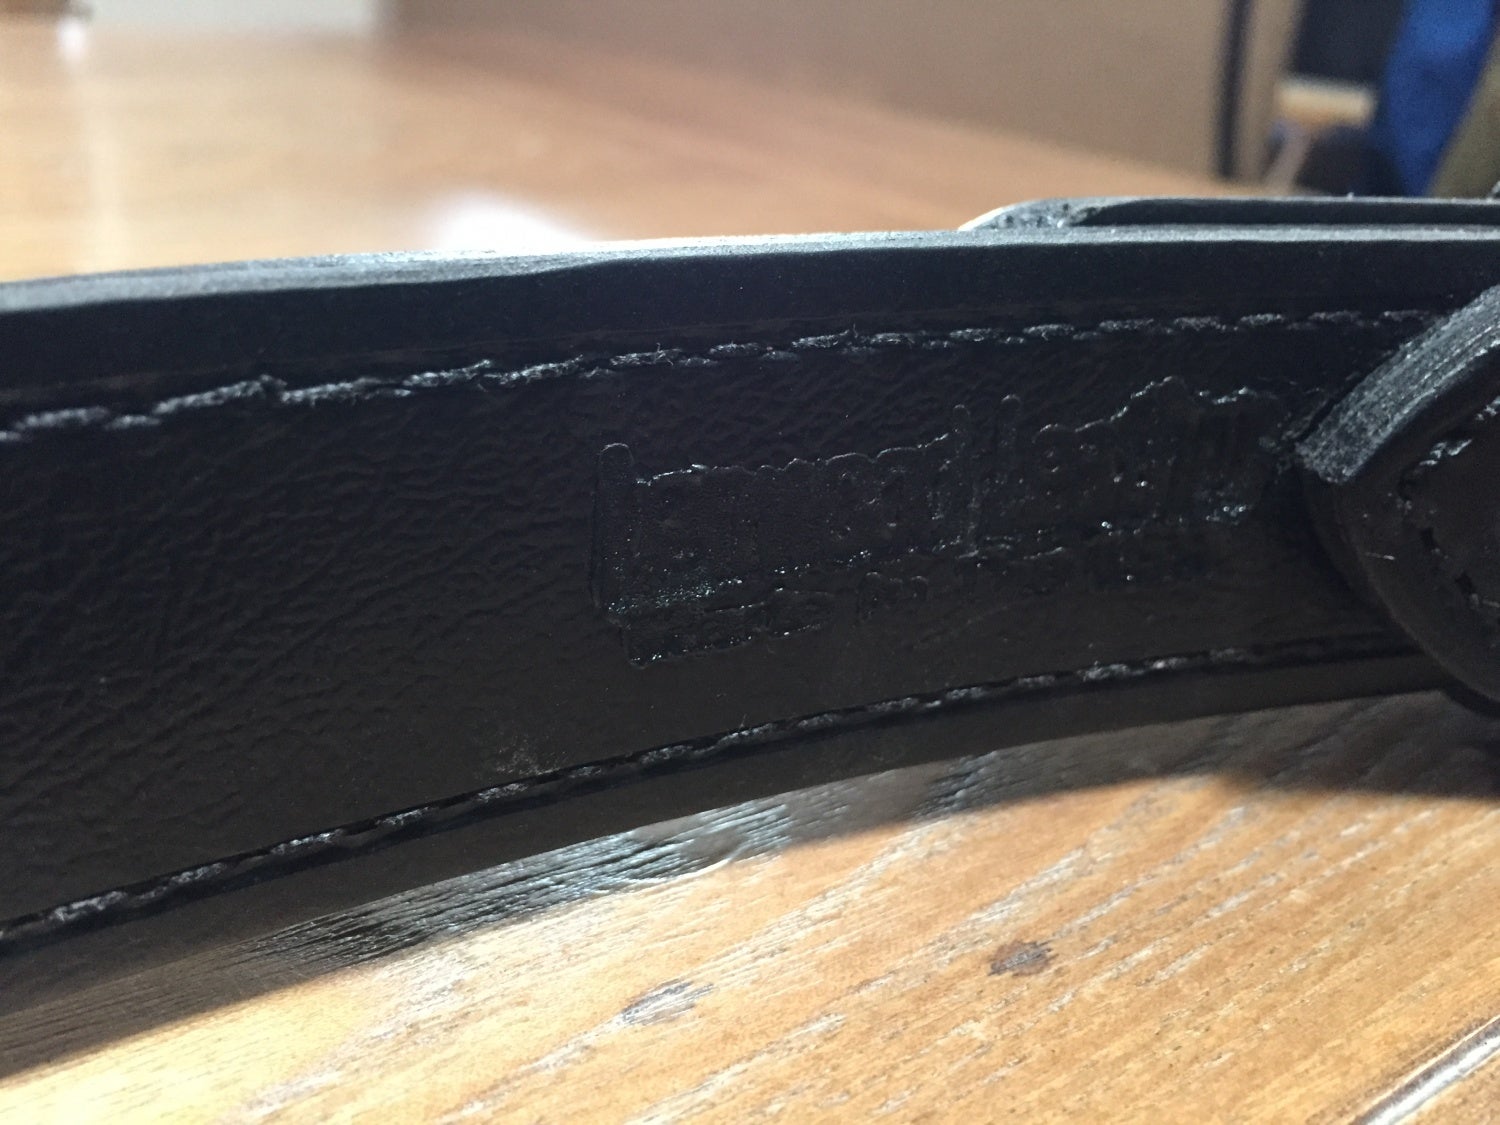 Lenwood Leather Belts: Hand Made, Over Built -The Firearm Blog